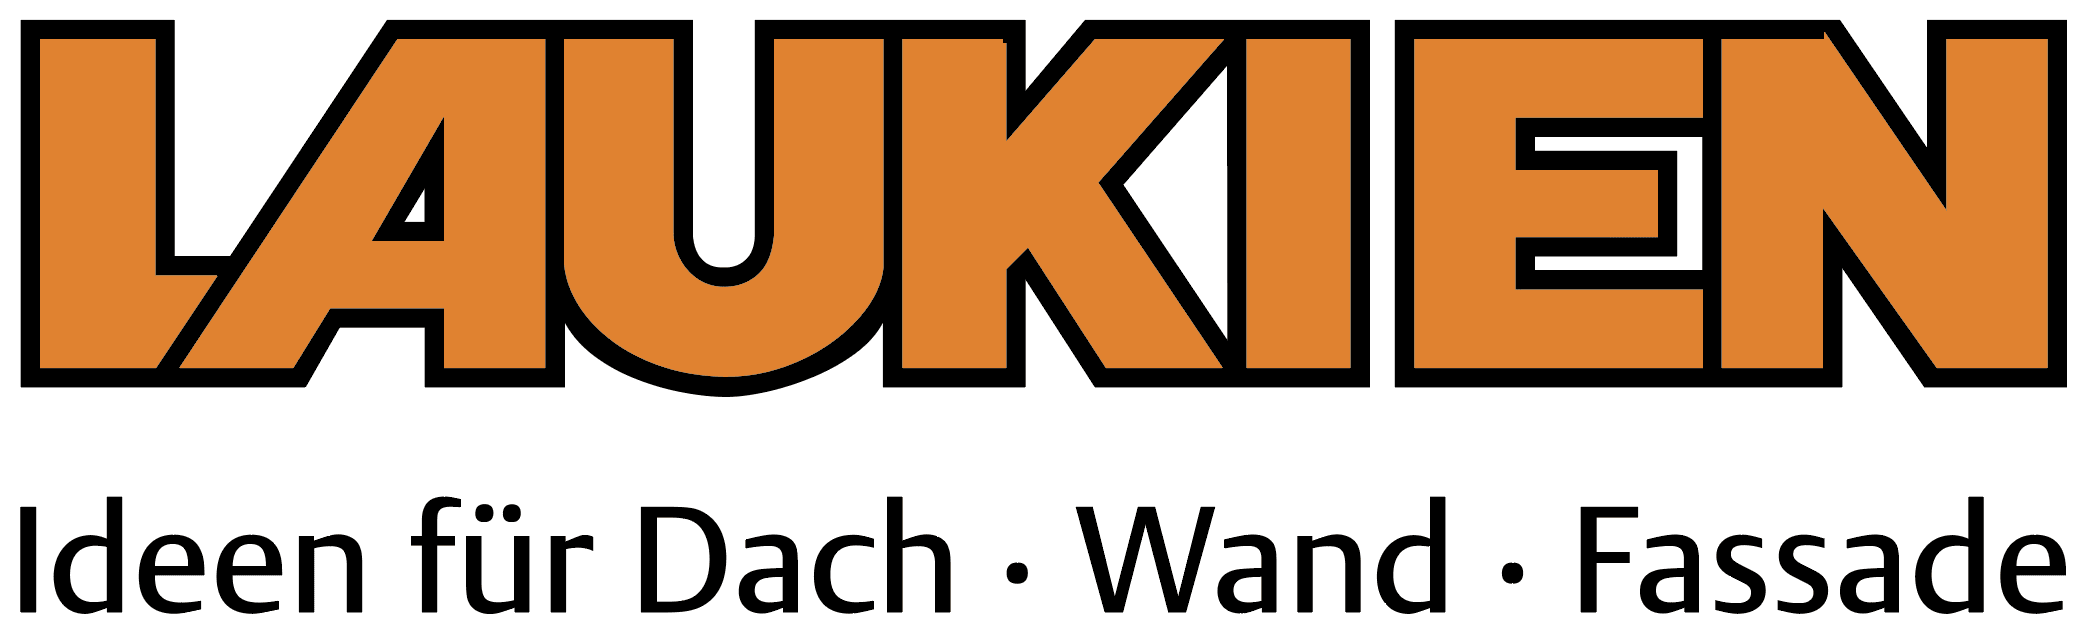 Hans Laukien GmbH